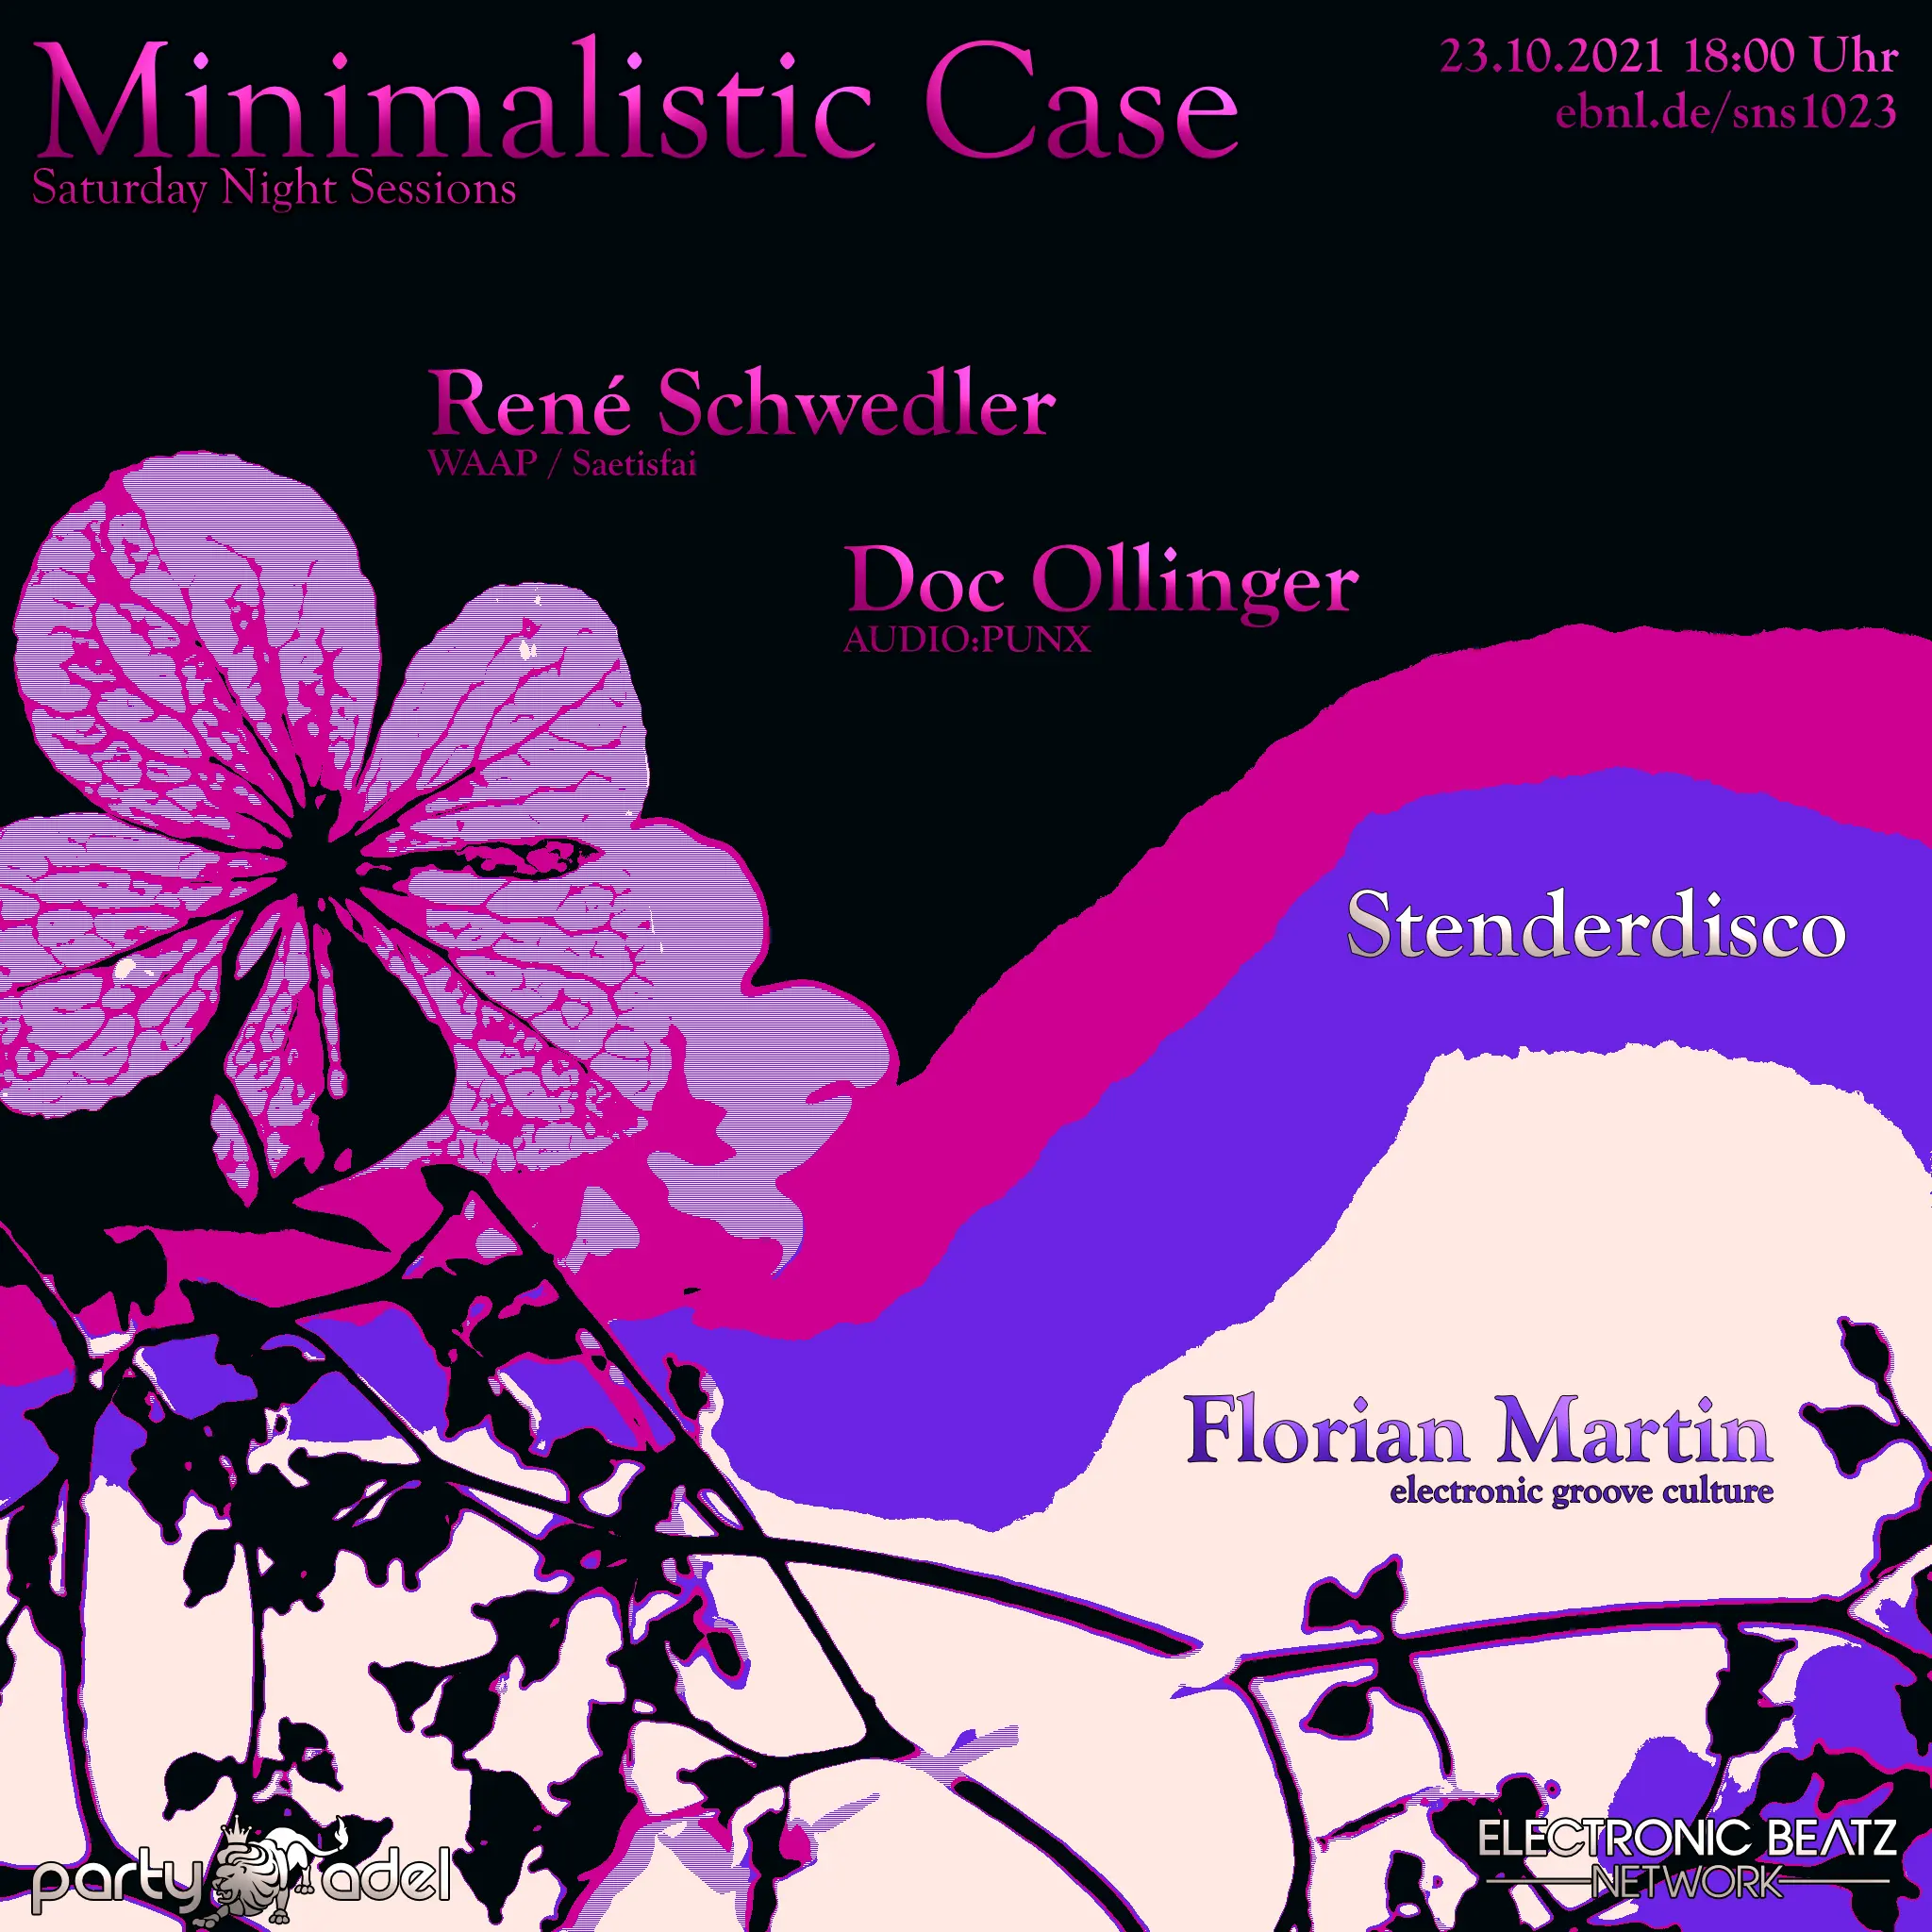 Minimalistic Case (23.10.2021)